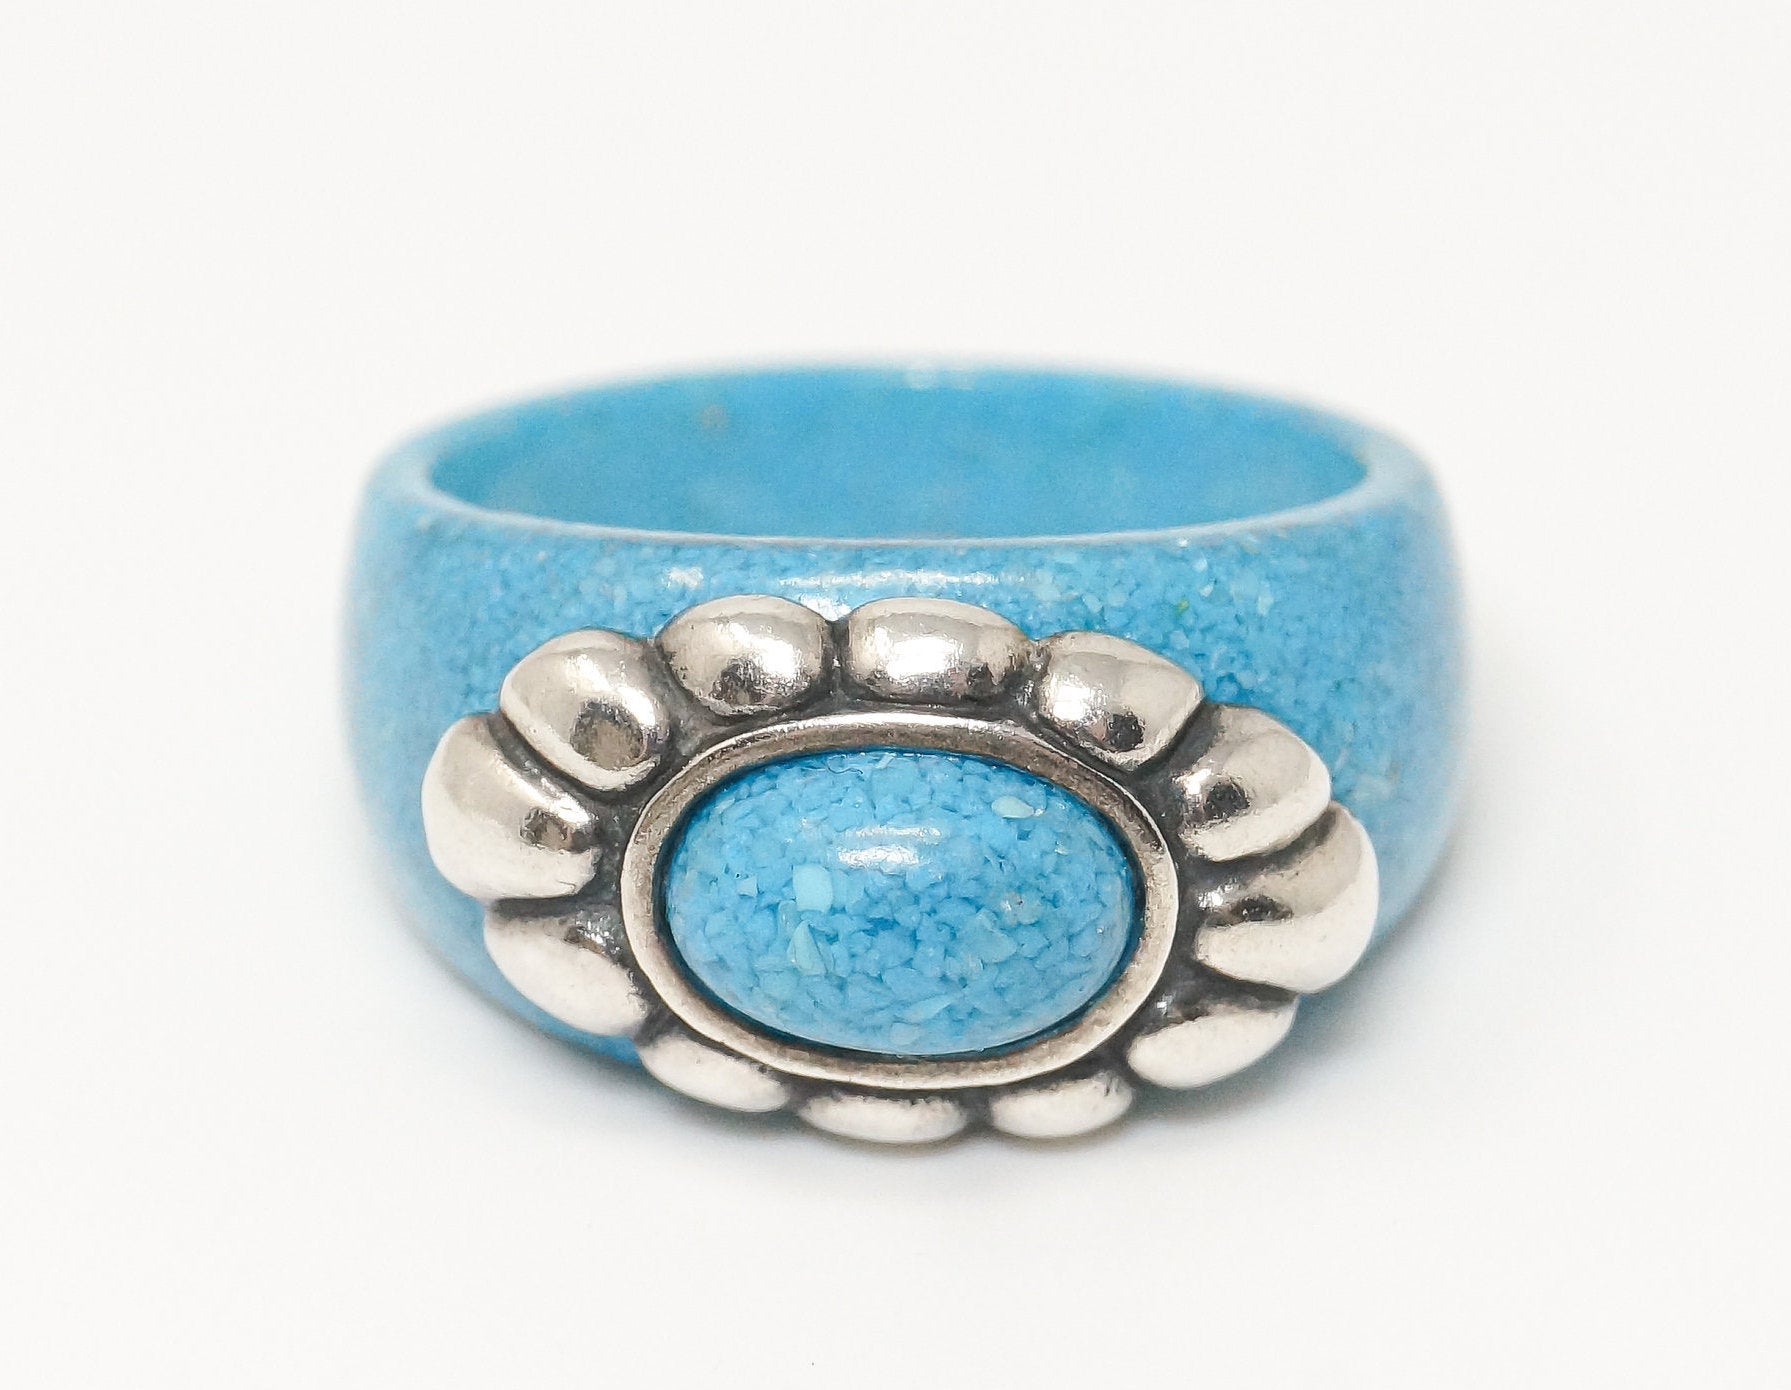 Vintage Southwest Designer CCO COLEMAN Lapis Lazuli Sterling Silver Ring - SZ 7